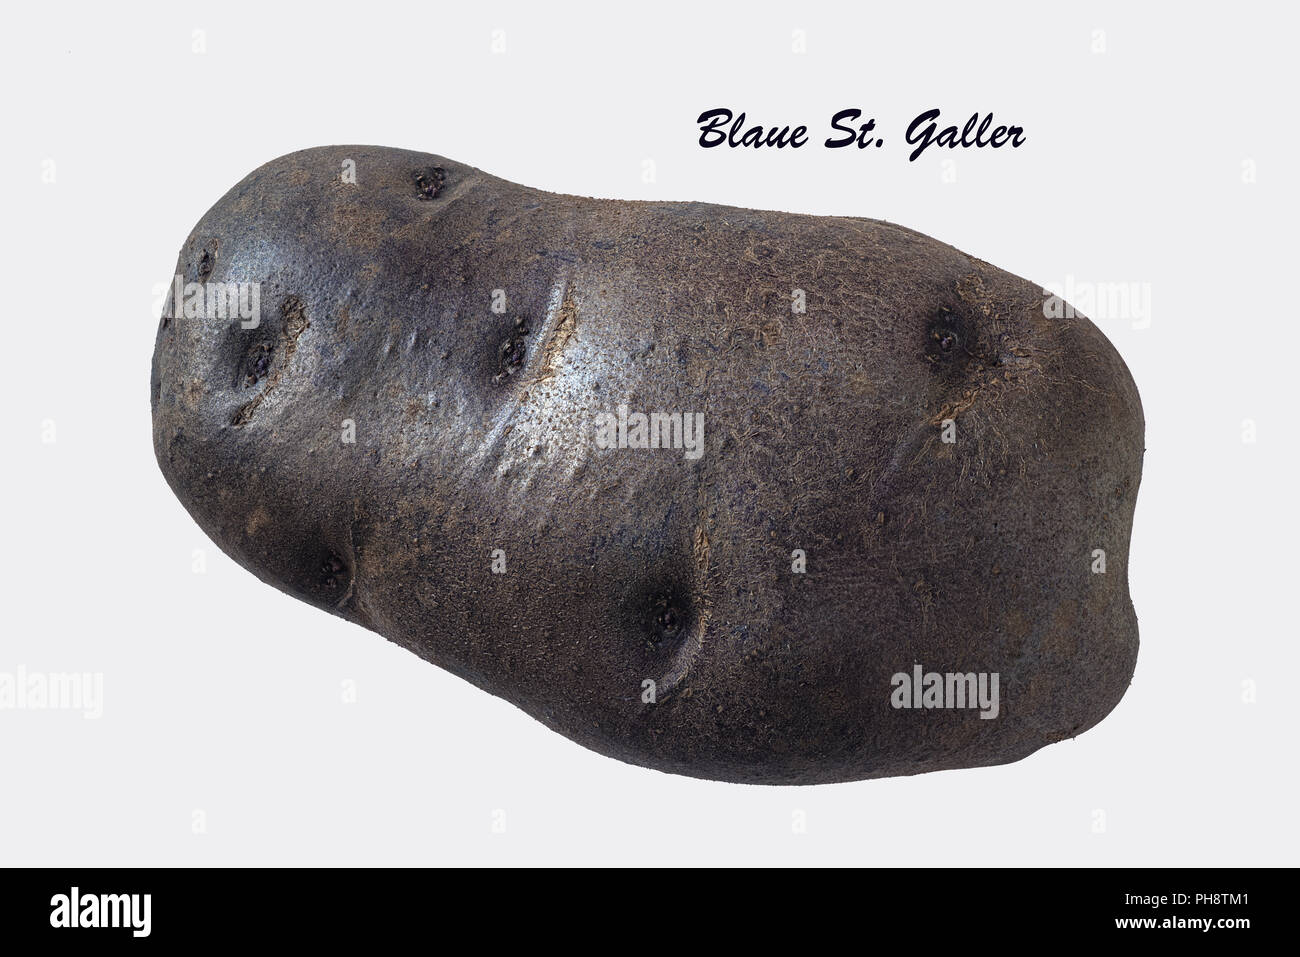 Blue Potatoe Cultivar:  Blaue St Galler, Cut-out Stock Photo